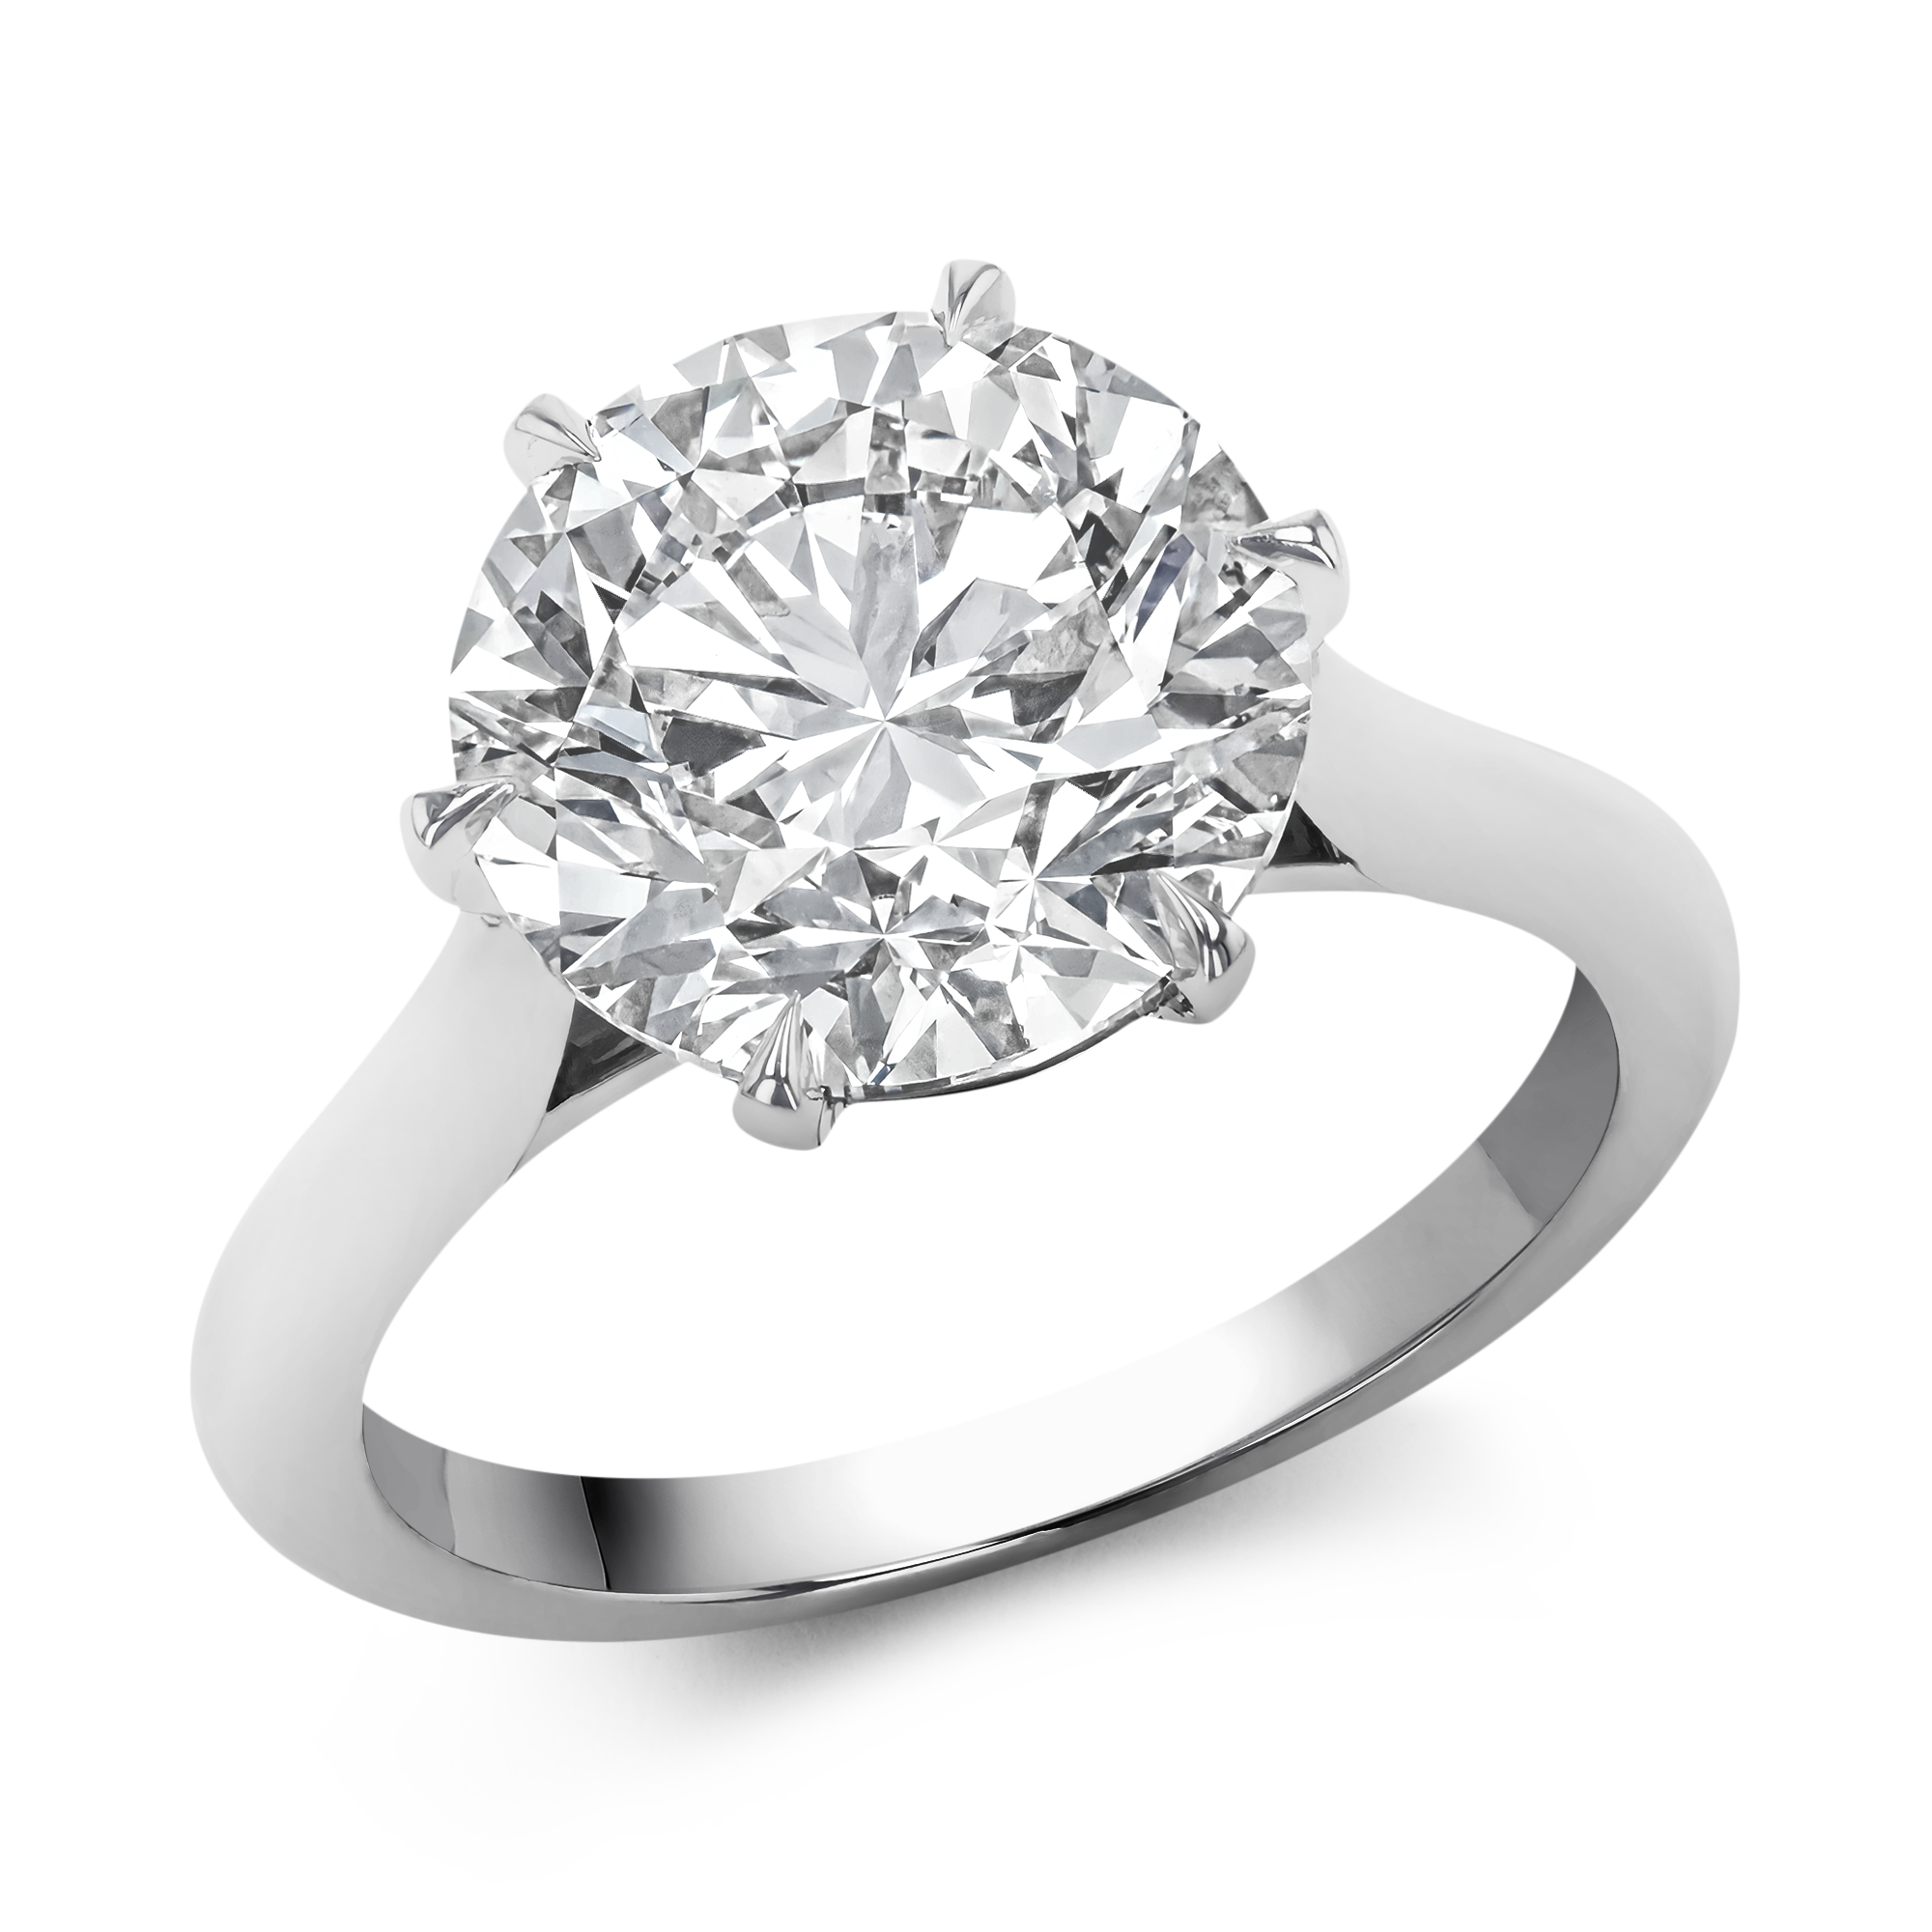 Brilliant Cut Solitaire Diamond Ring 5.01ct in 18ct White Gold ...